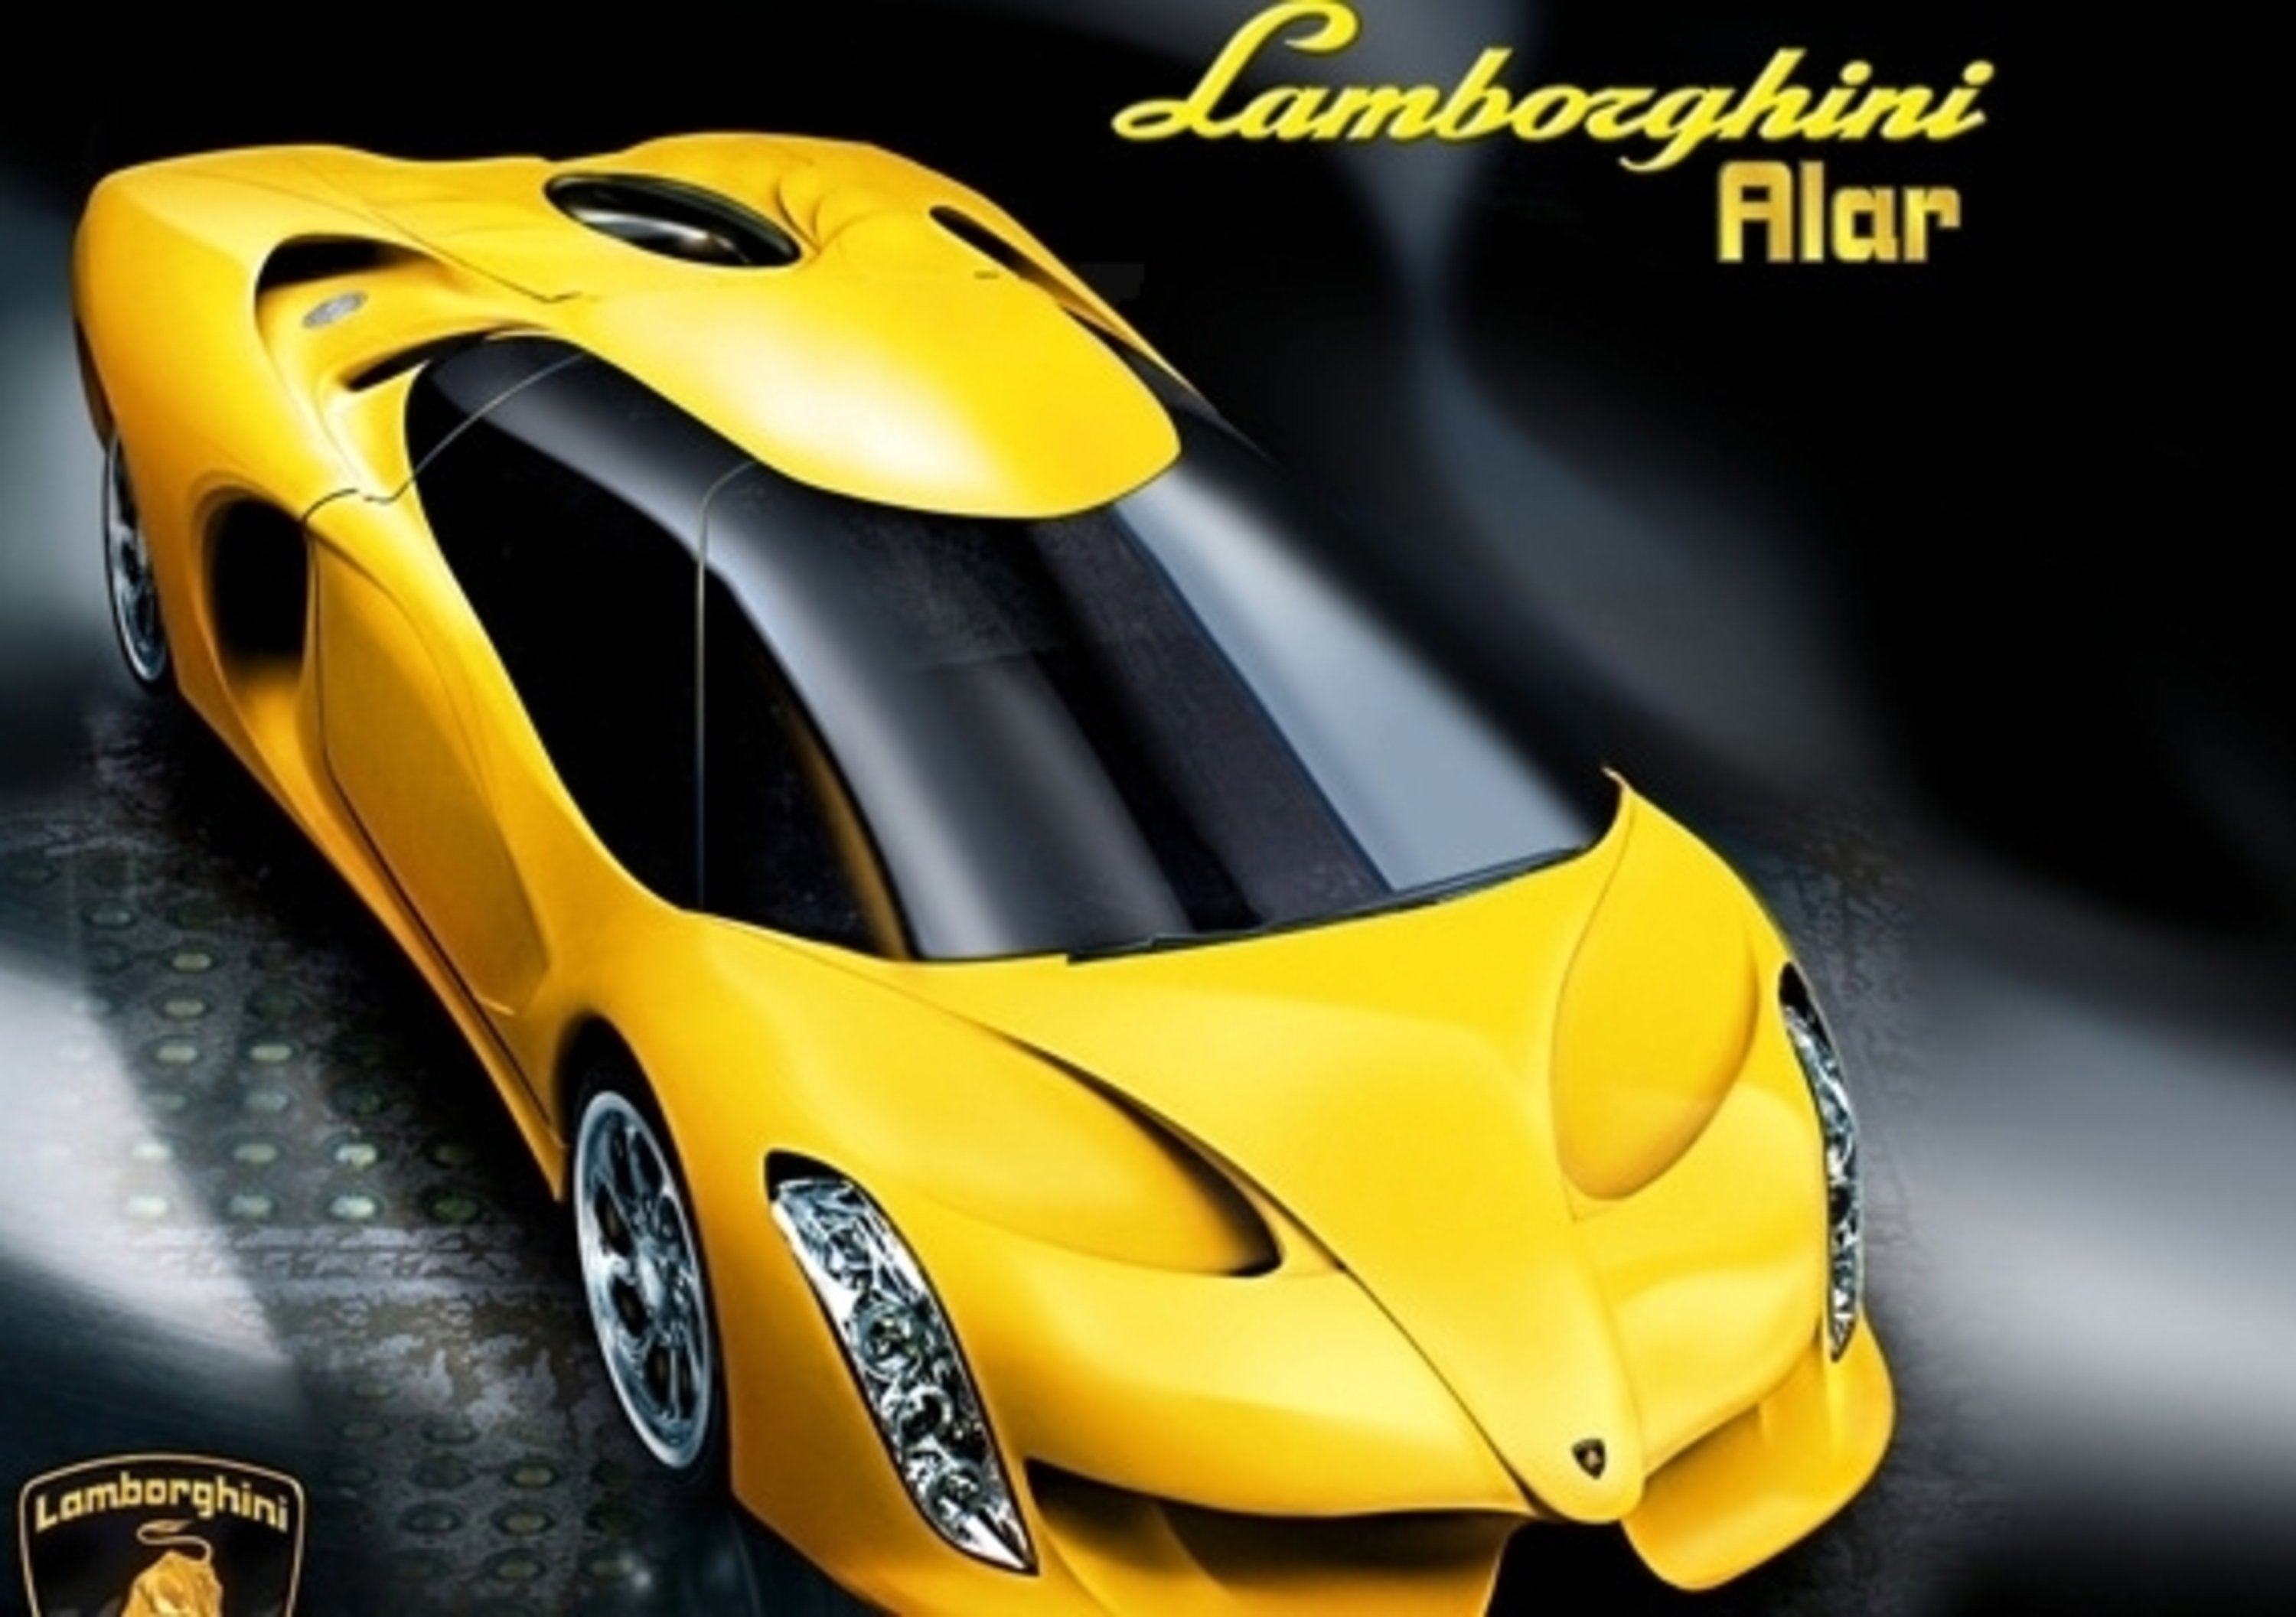 Bufala: Lamborghini Alar